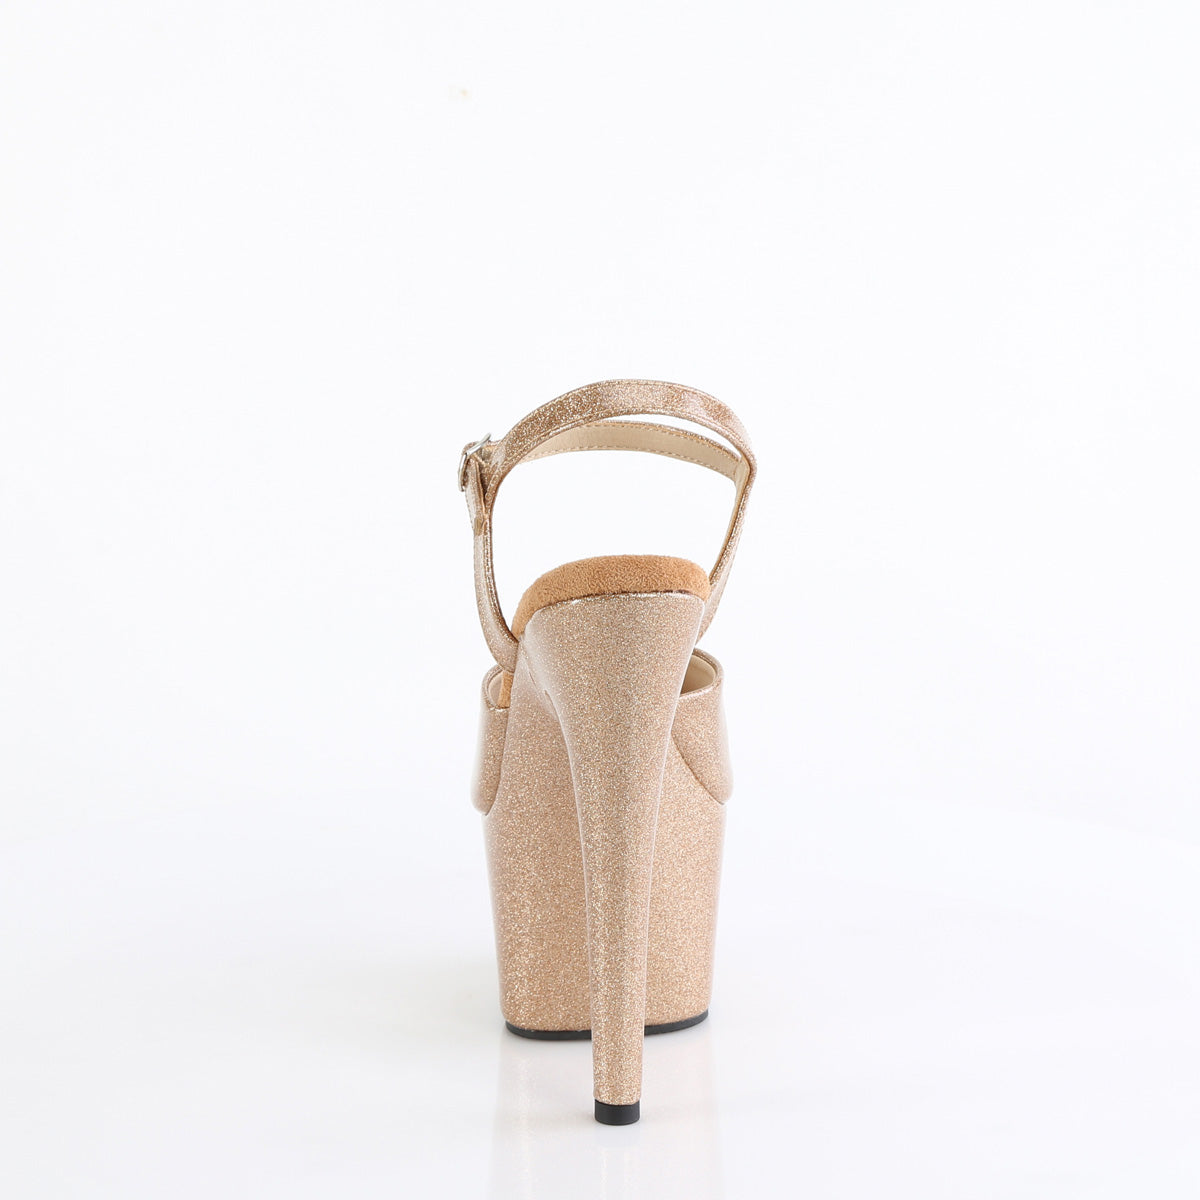 ADORE-709GP Pleaser Gold Glitter Patent Platform Shoes [Exotic Dance Shoes]